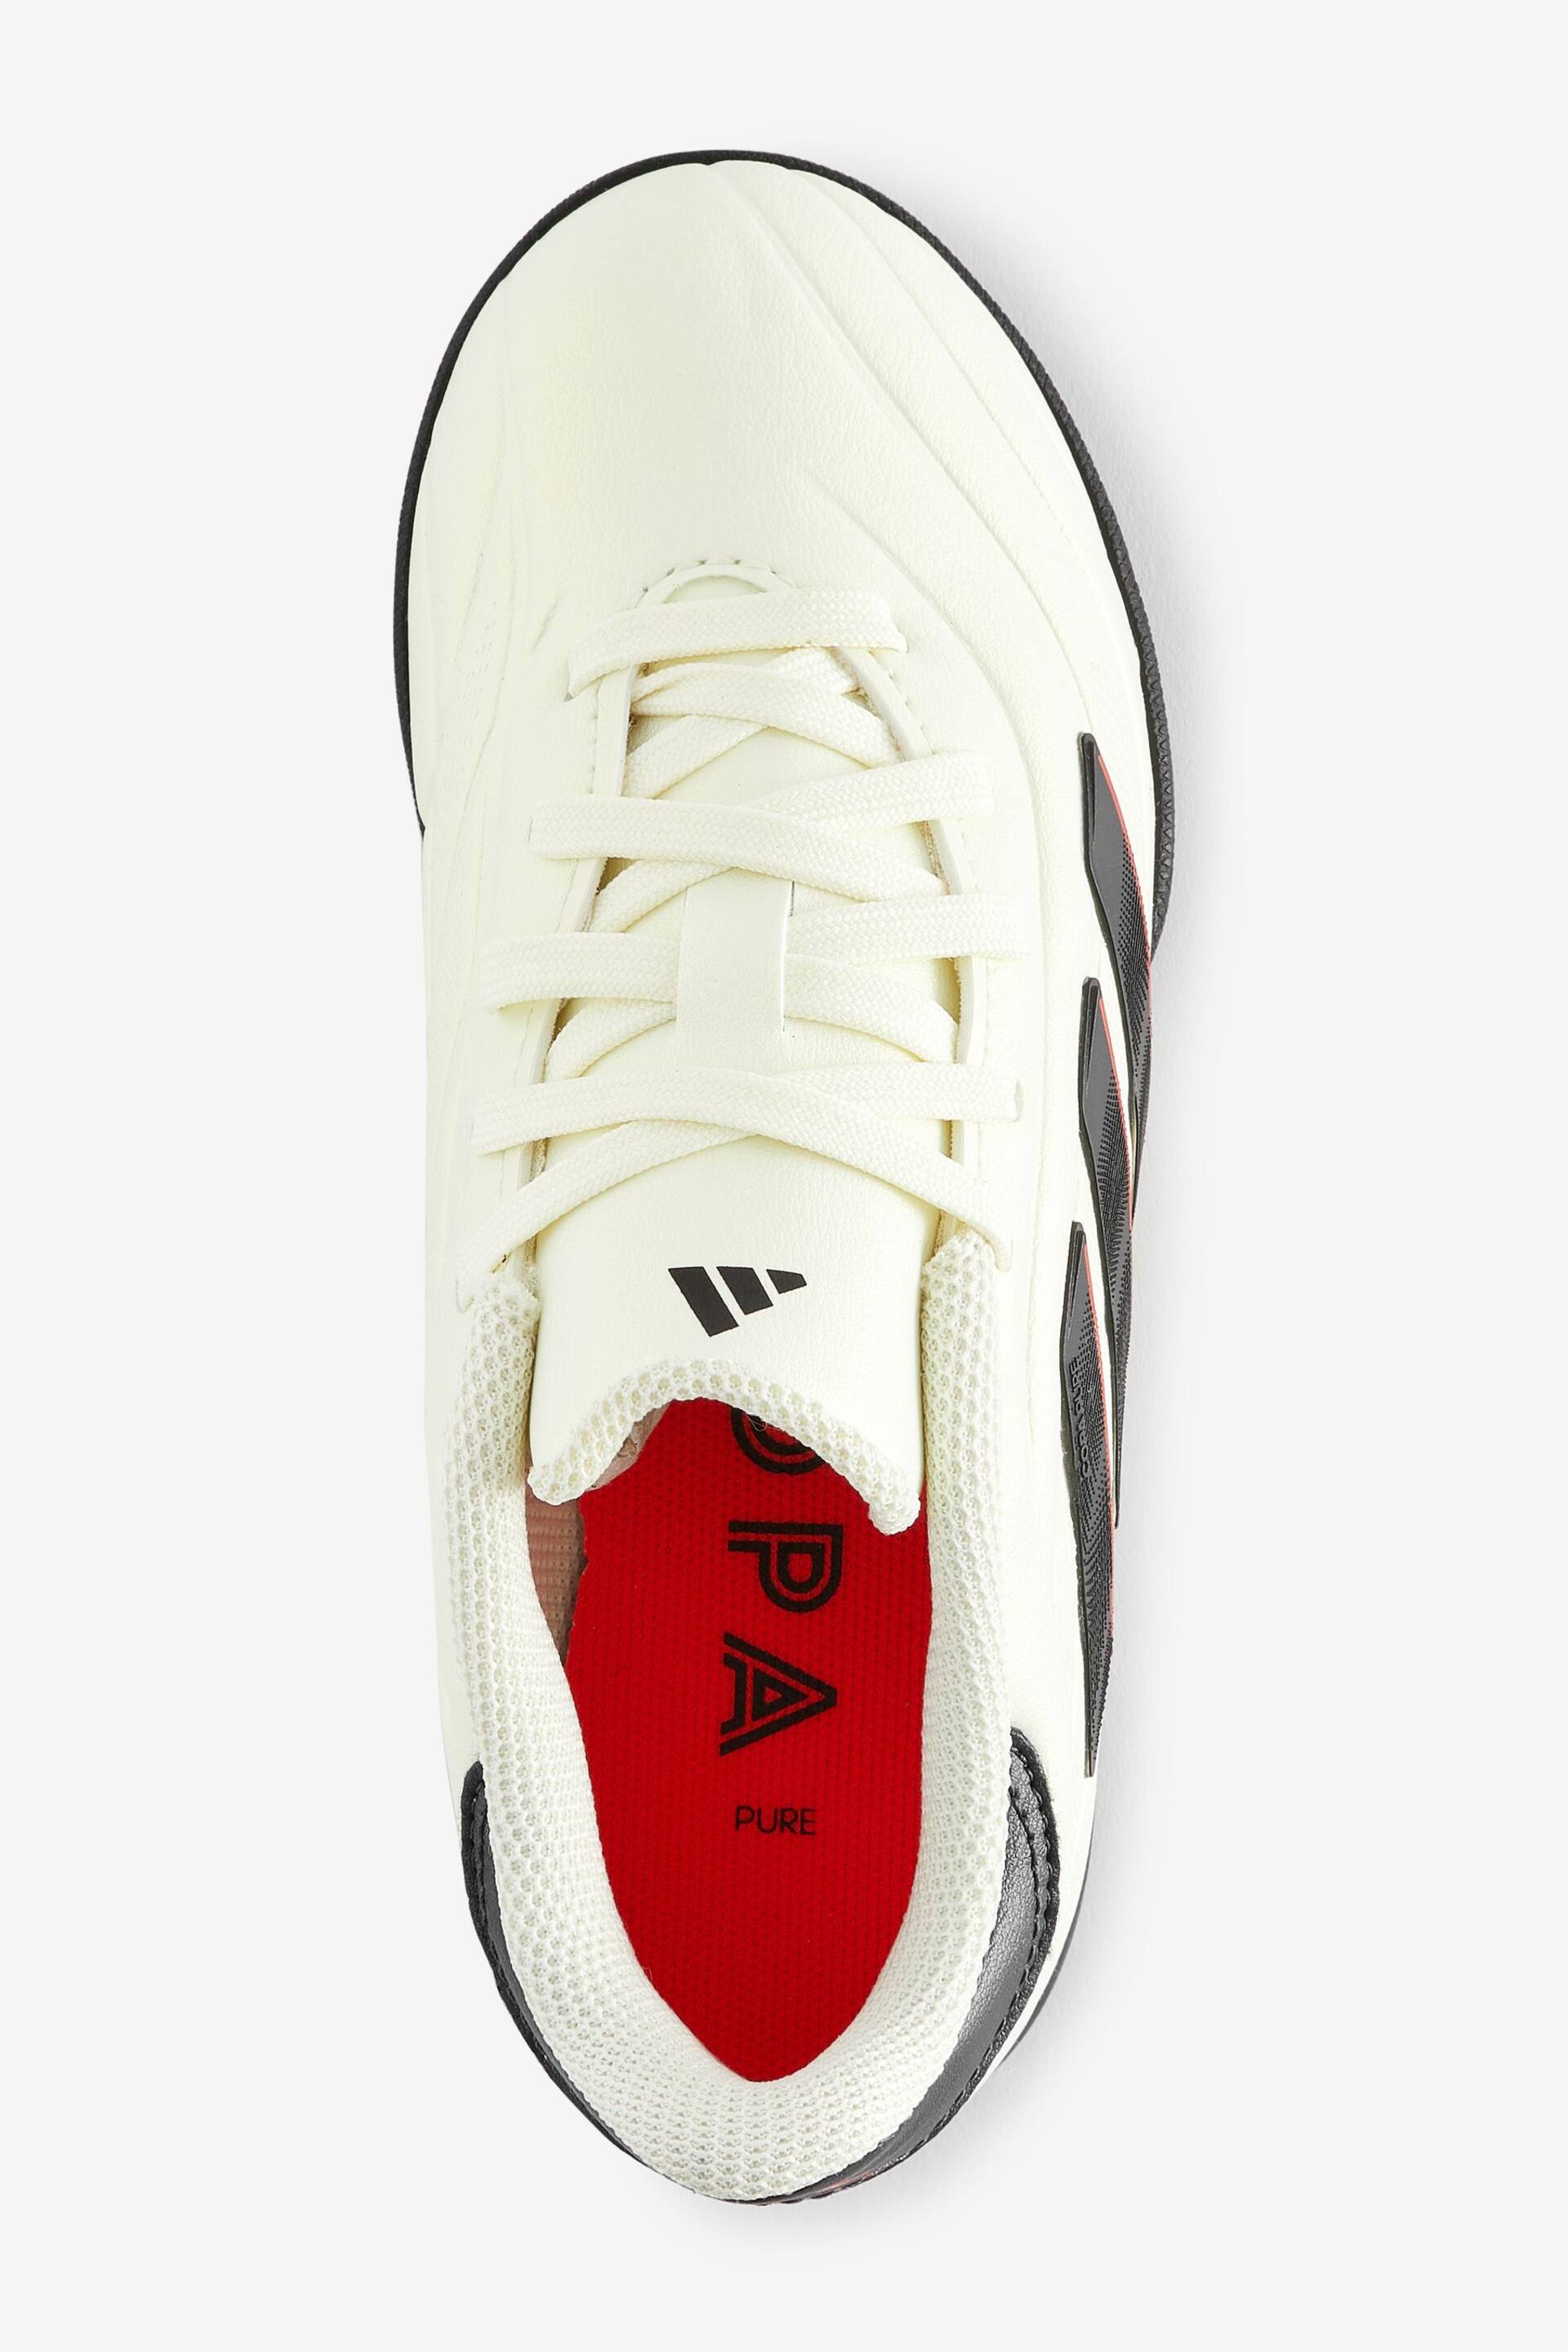 adidas Cream Performance Copa Pure Ii League Turf Boots - Image 3 of 5